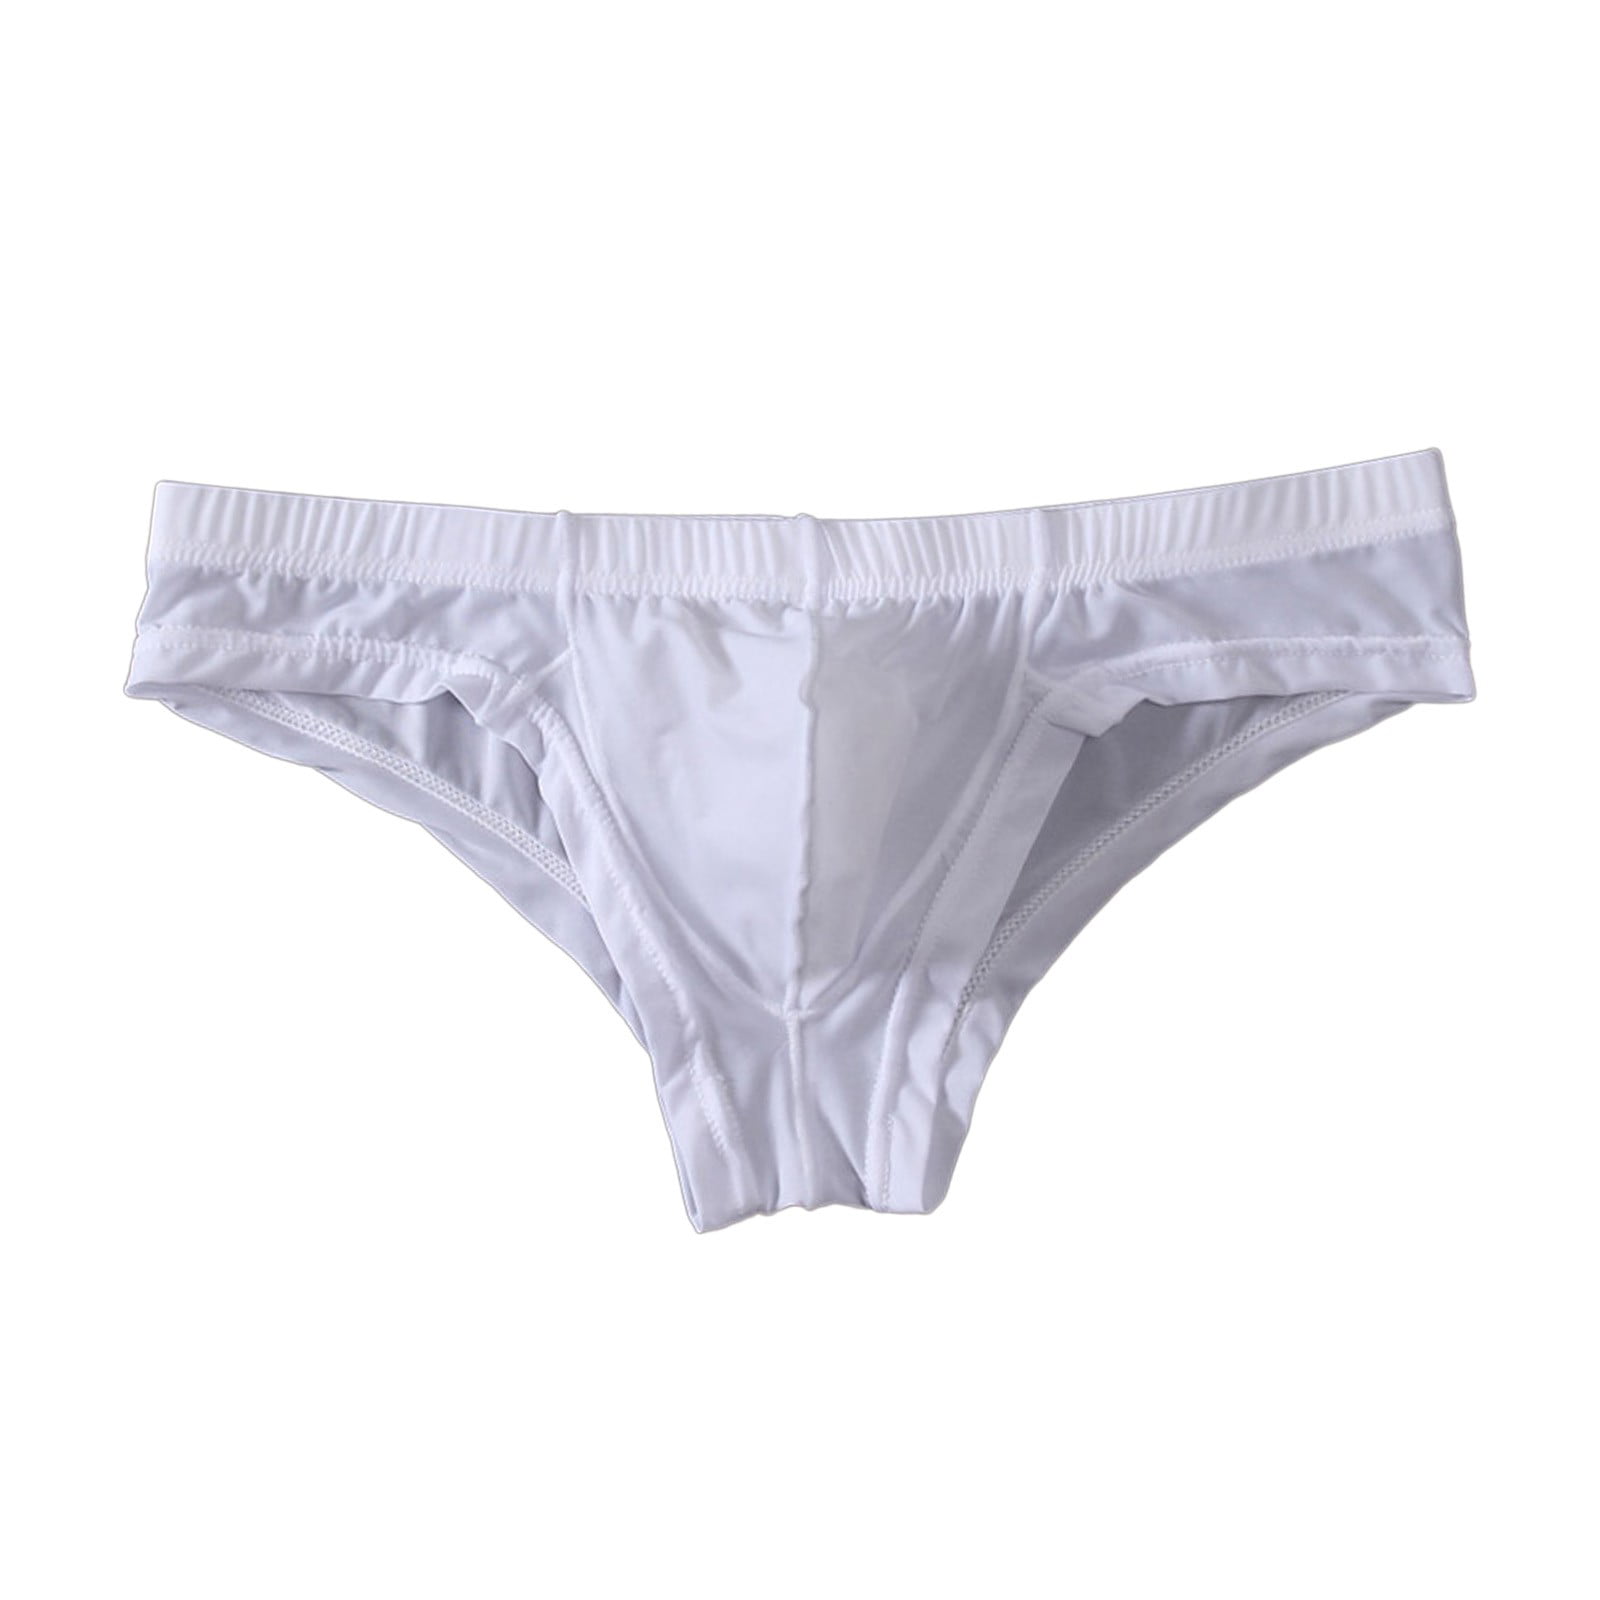 kpoplk Men Underwear Mens Briefs Men Casual Fashion Elastic-Waisted  Breathable Boxers Briefs(White,XL)